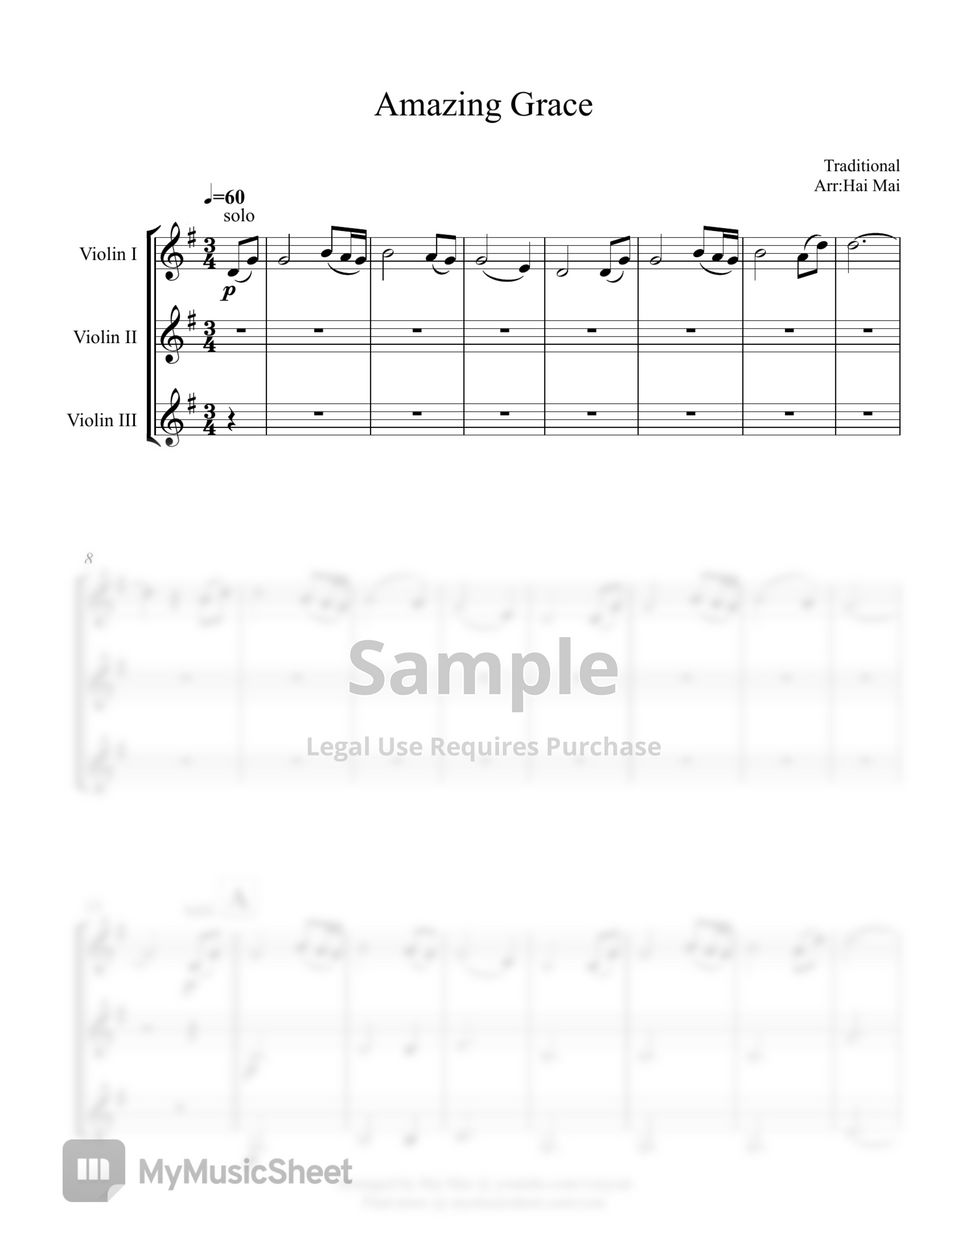 John Newton - Amazing Grace - For Violin ensemble 3 parts by Hai Mai